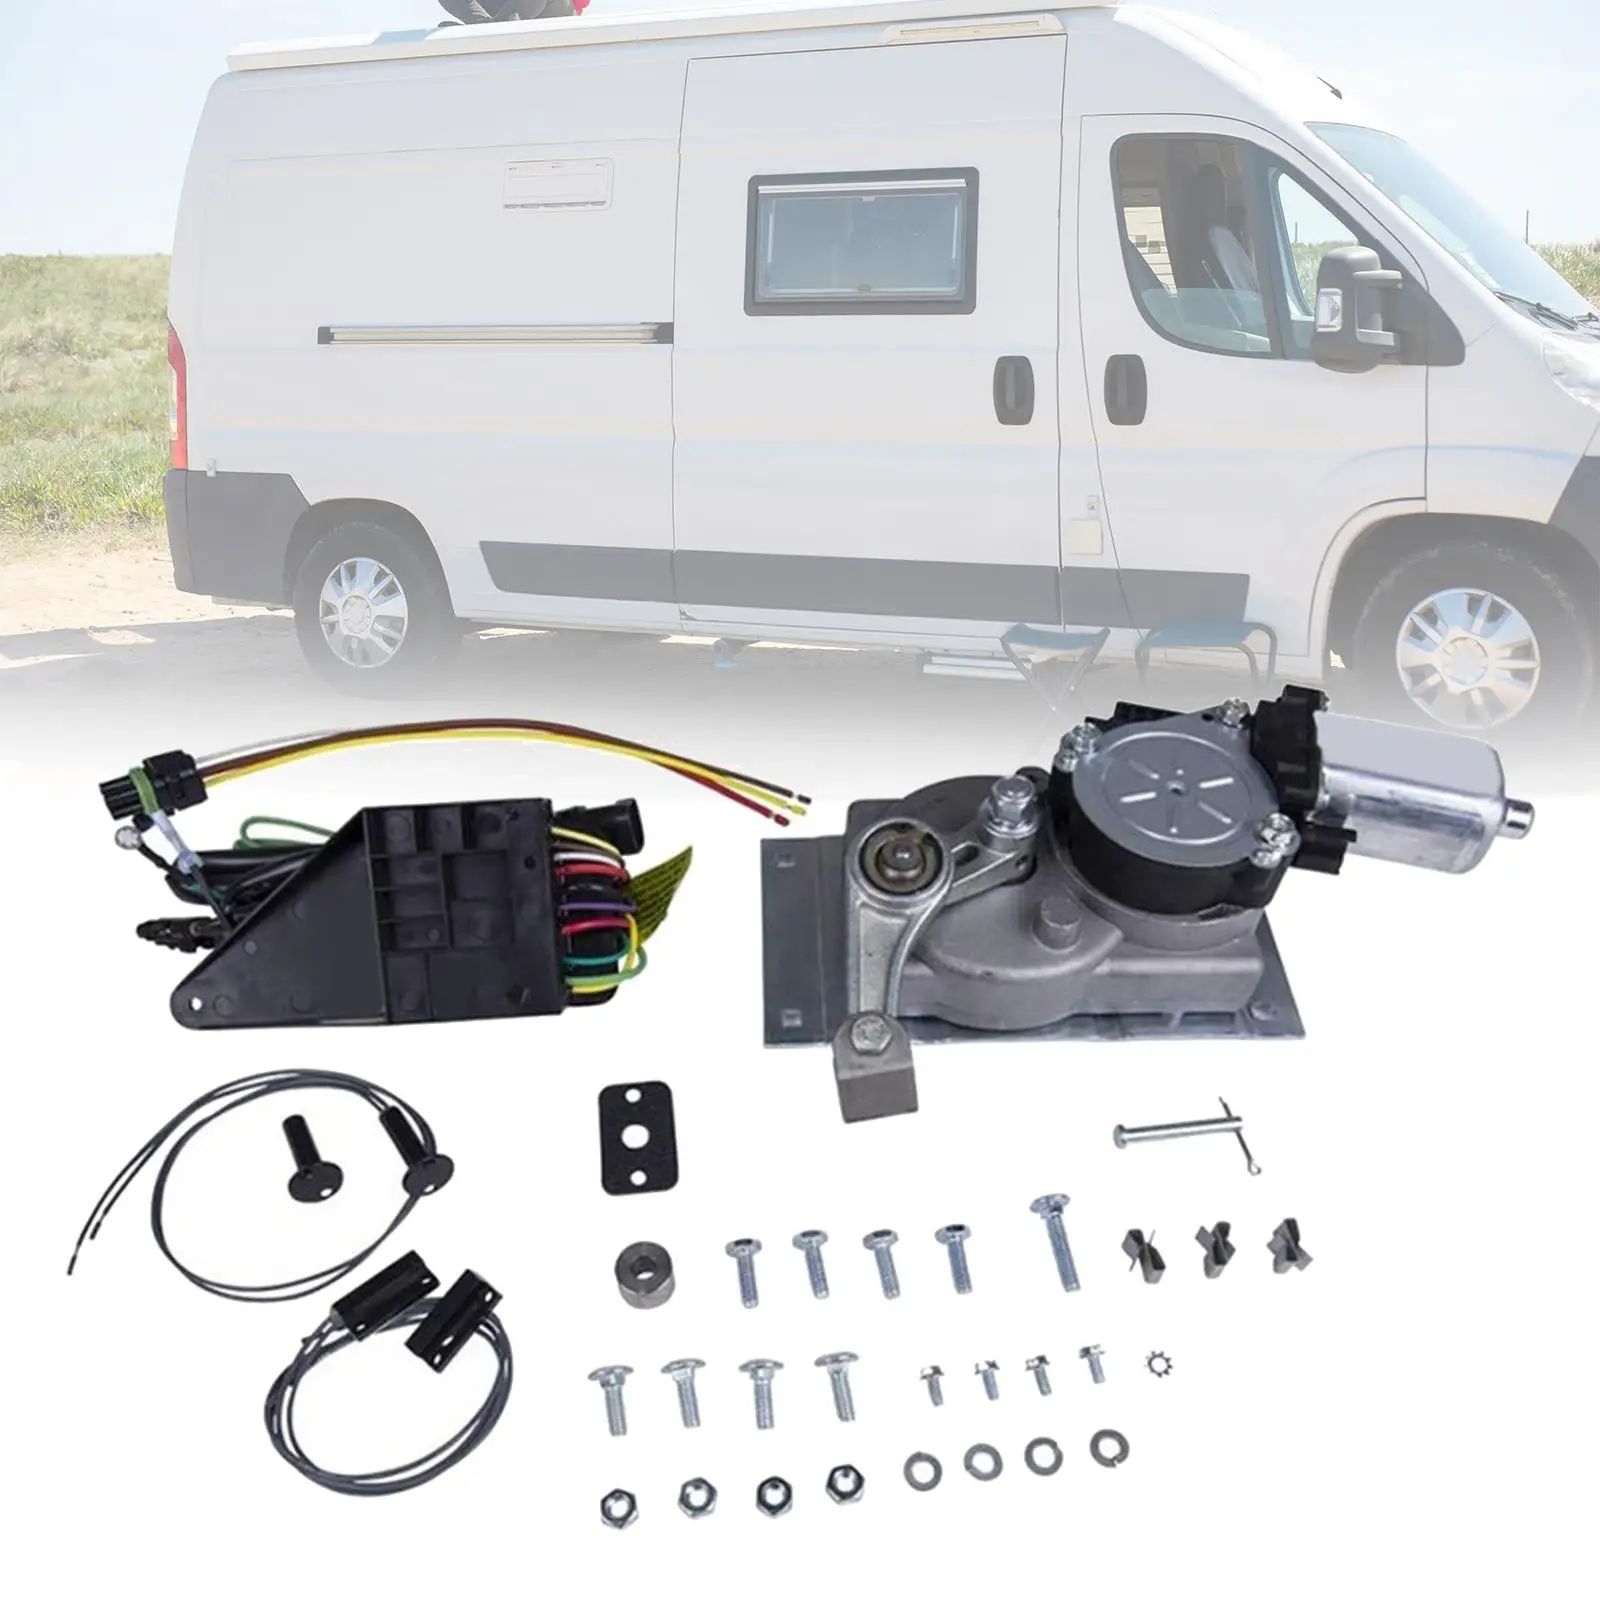 RV Trailer Step Motor Conversion Kit Motor Conversion Kit for Truck Travel Trailers Motorhomes B Linkage Easily Install